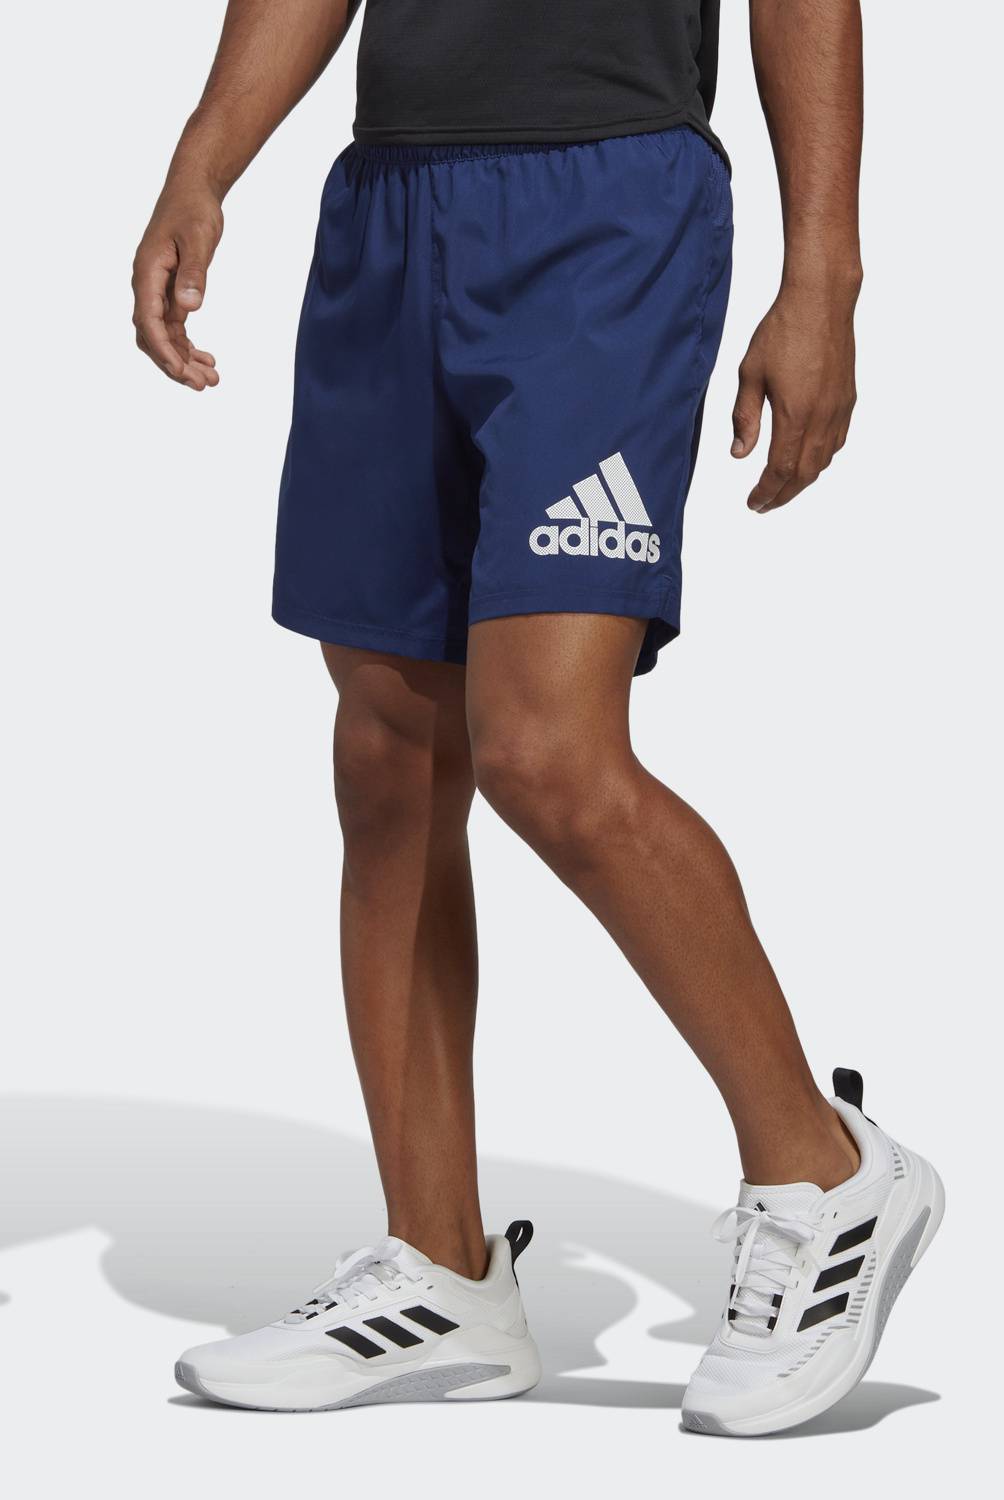 ADIDAS - Short Deportivo Hombre Adidas